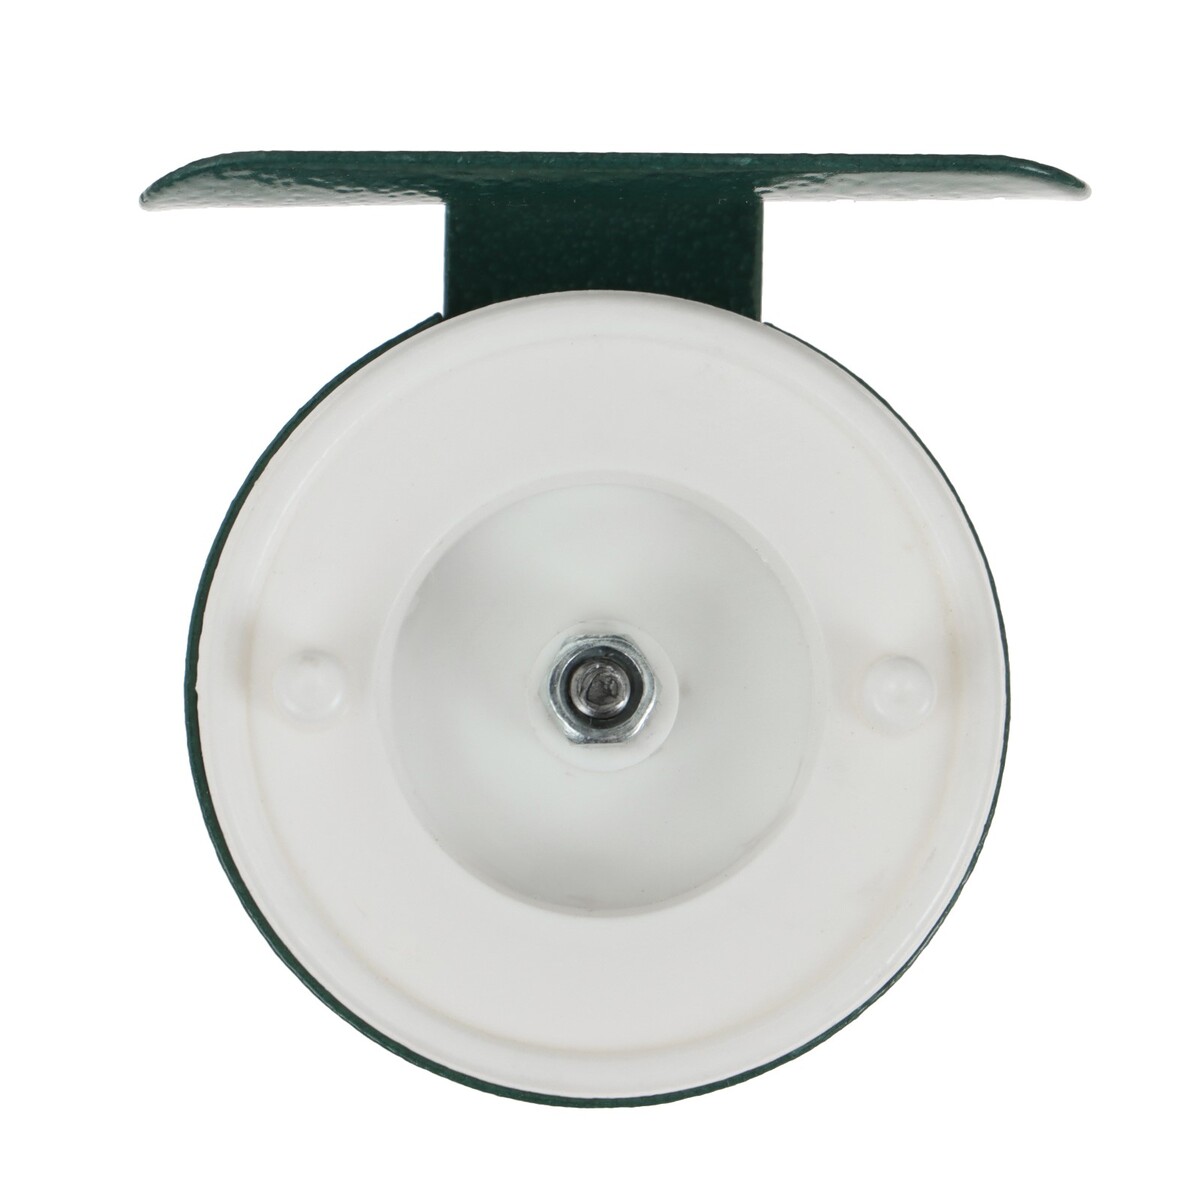 Катушка инерционная, металл пластик, диаметр 5 см, цвет белый-зеленый, 601 No brand 010293731 - фото 4